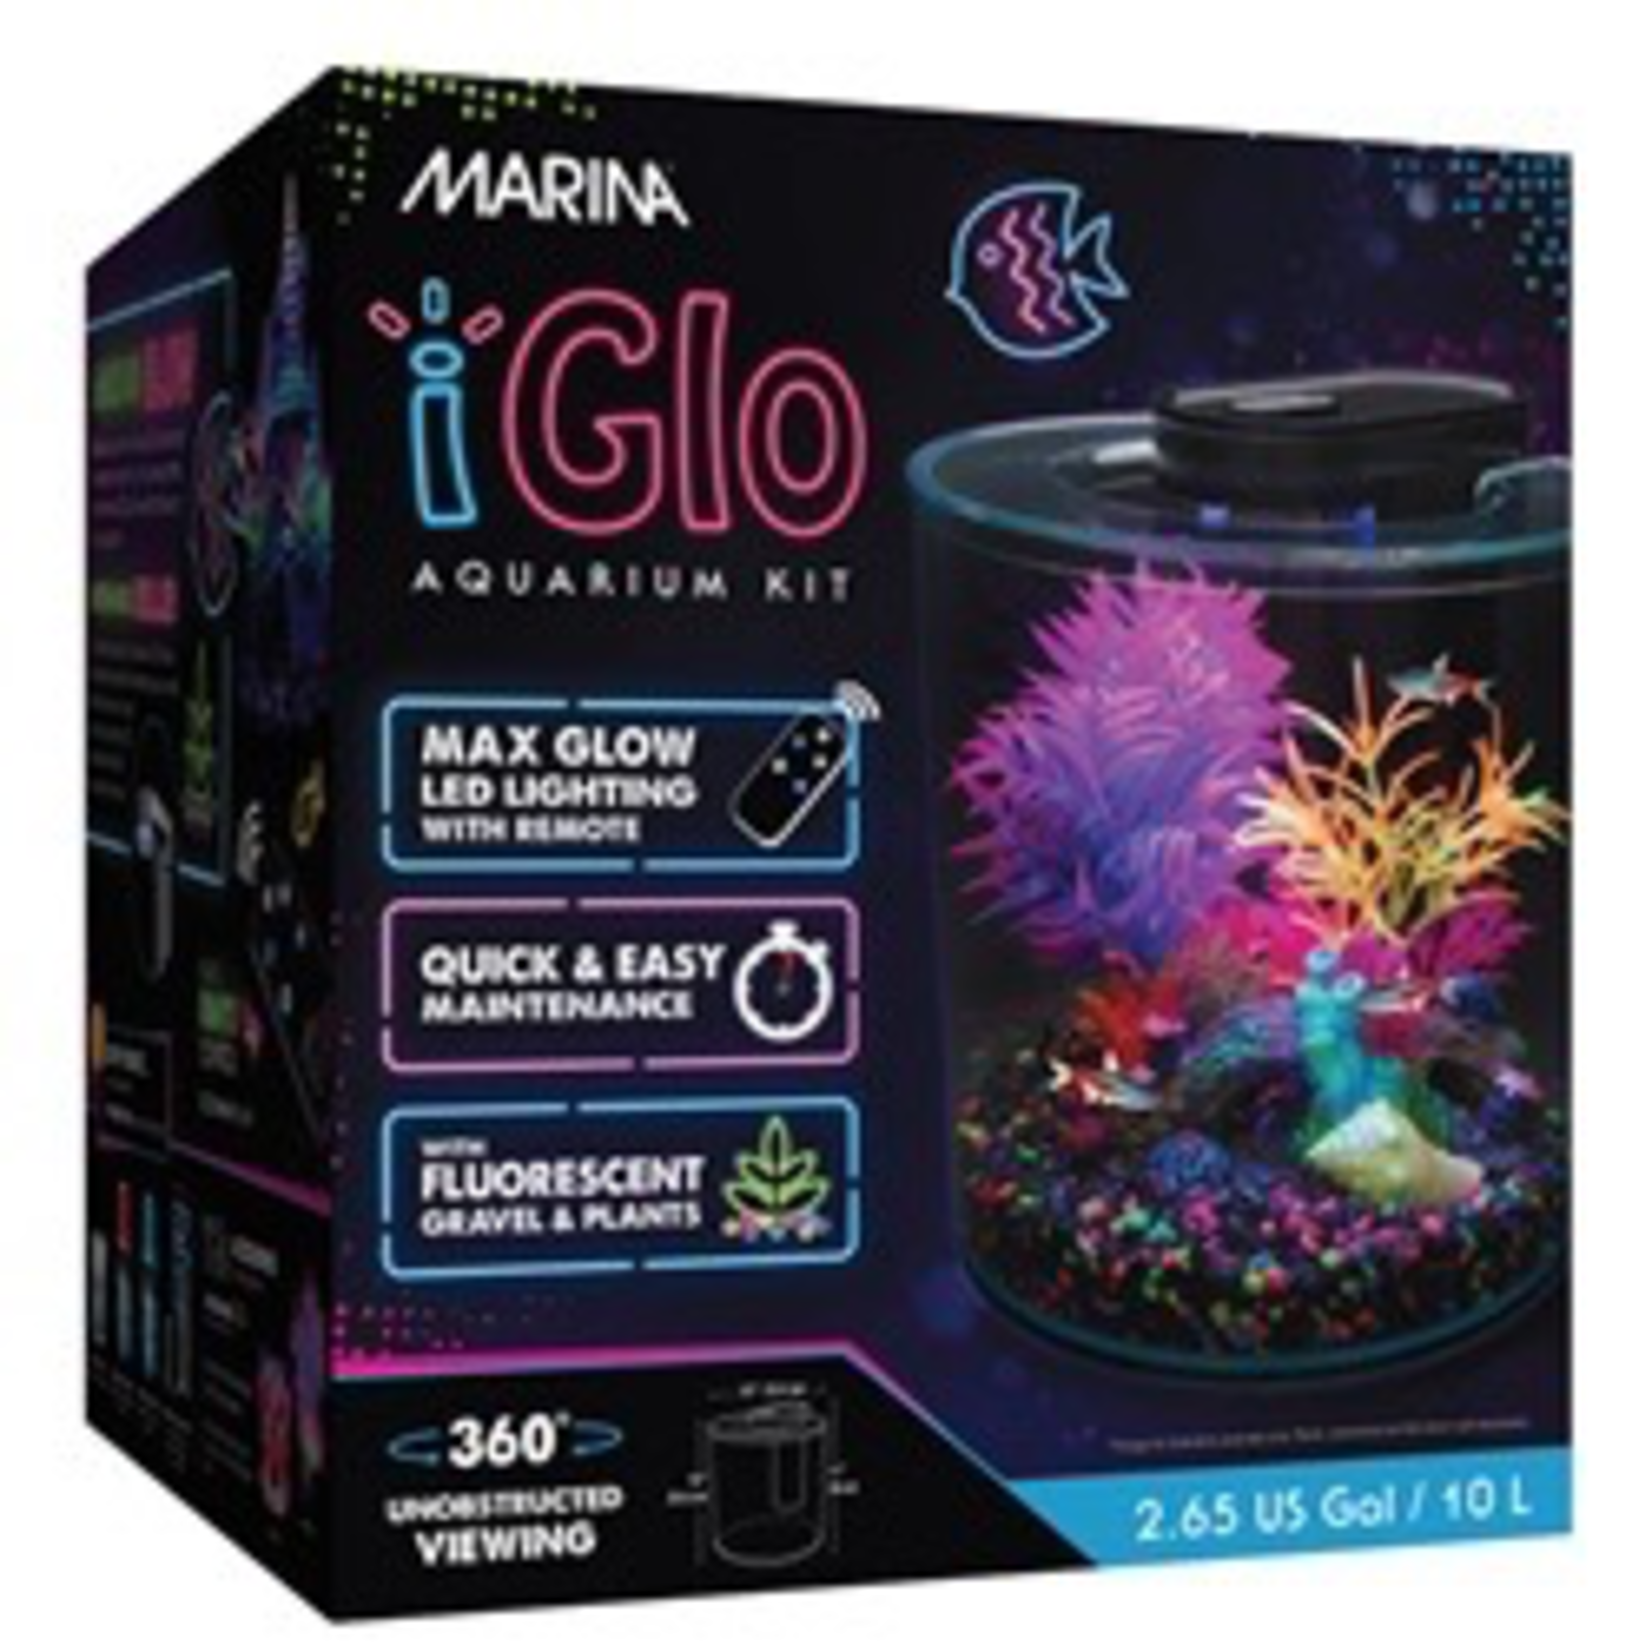 MARINA Marina iGlo 360° Aquarium Kit, 2.65 gal.